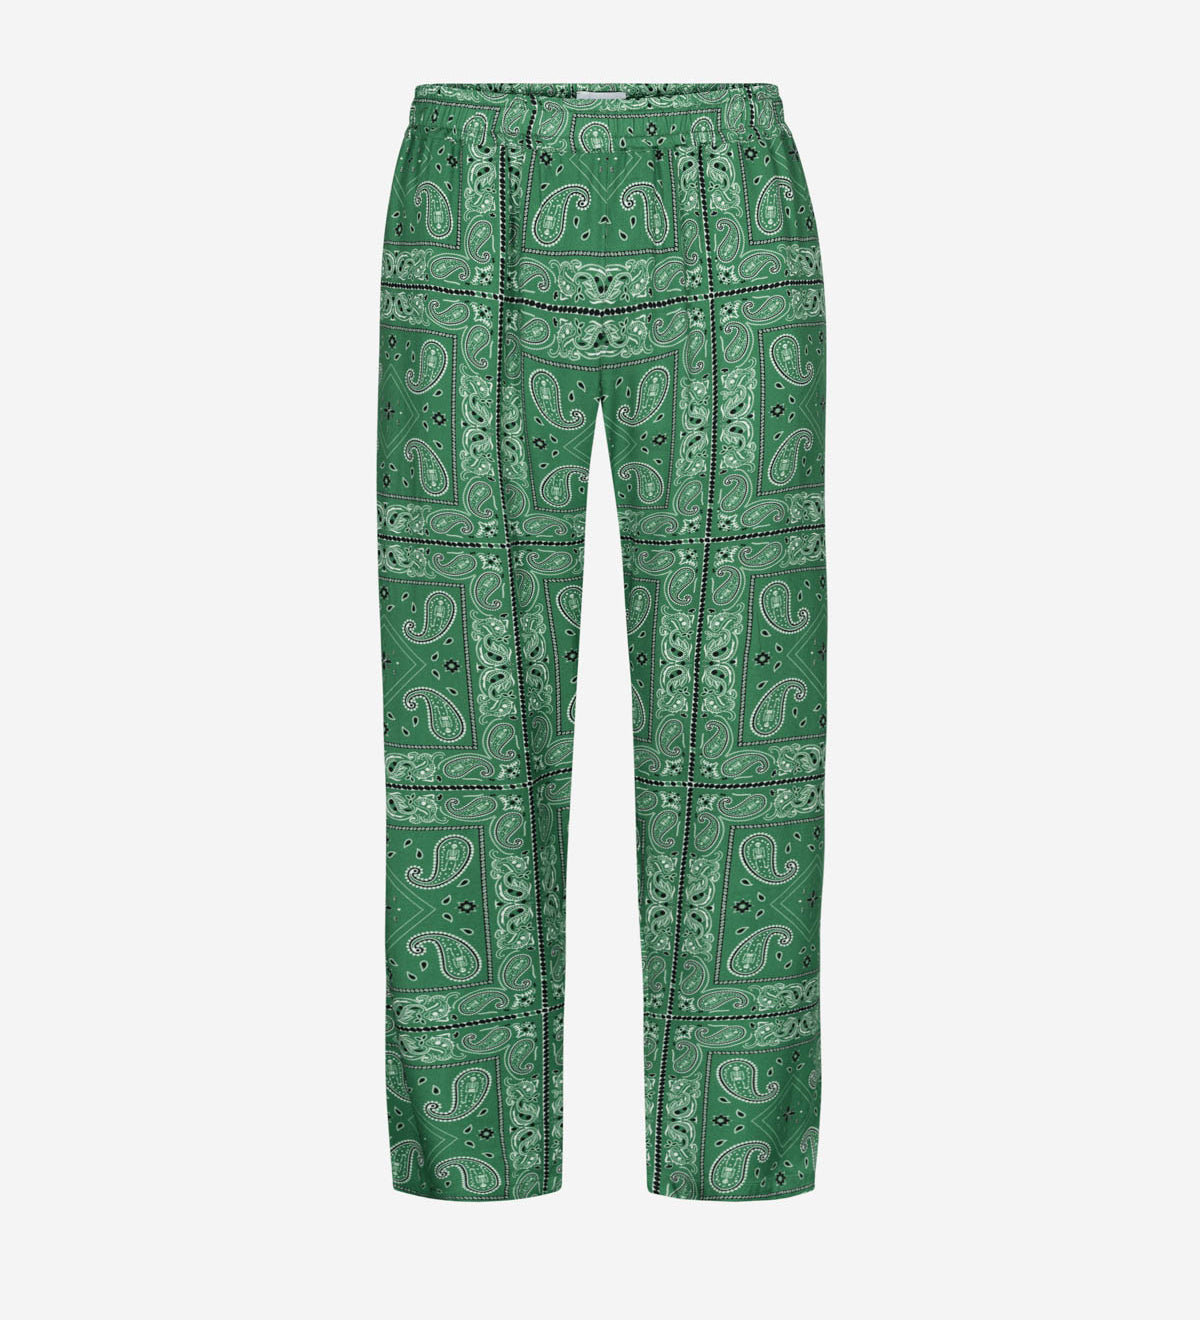 Long green patterned vacation pants